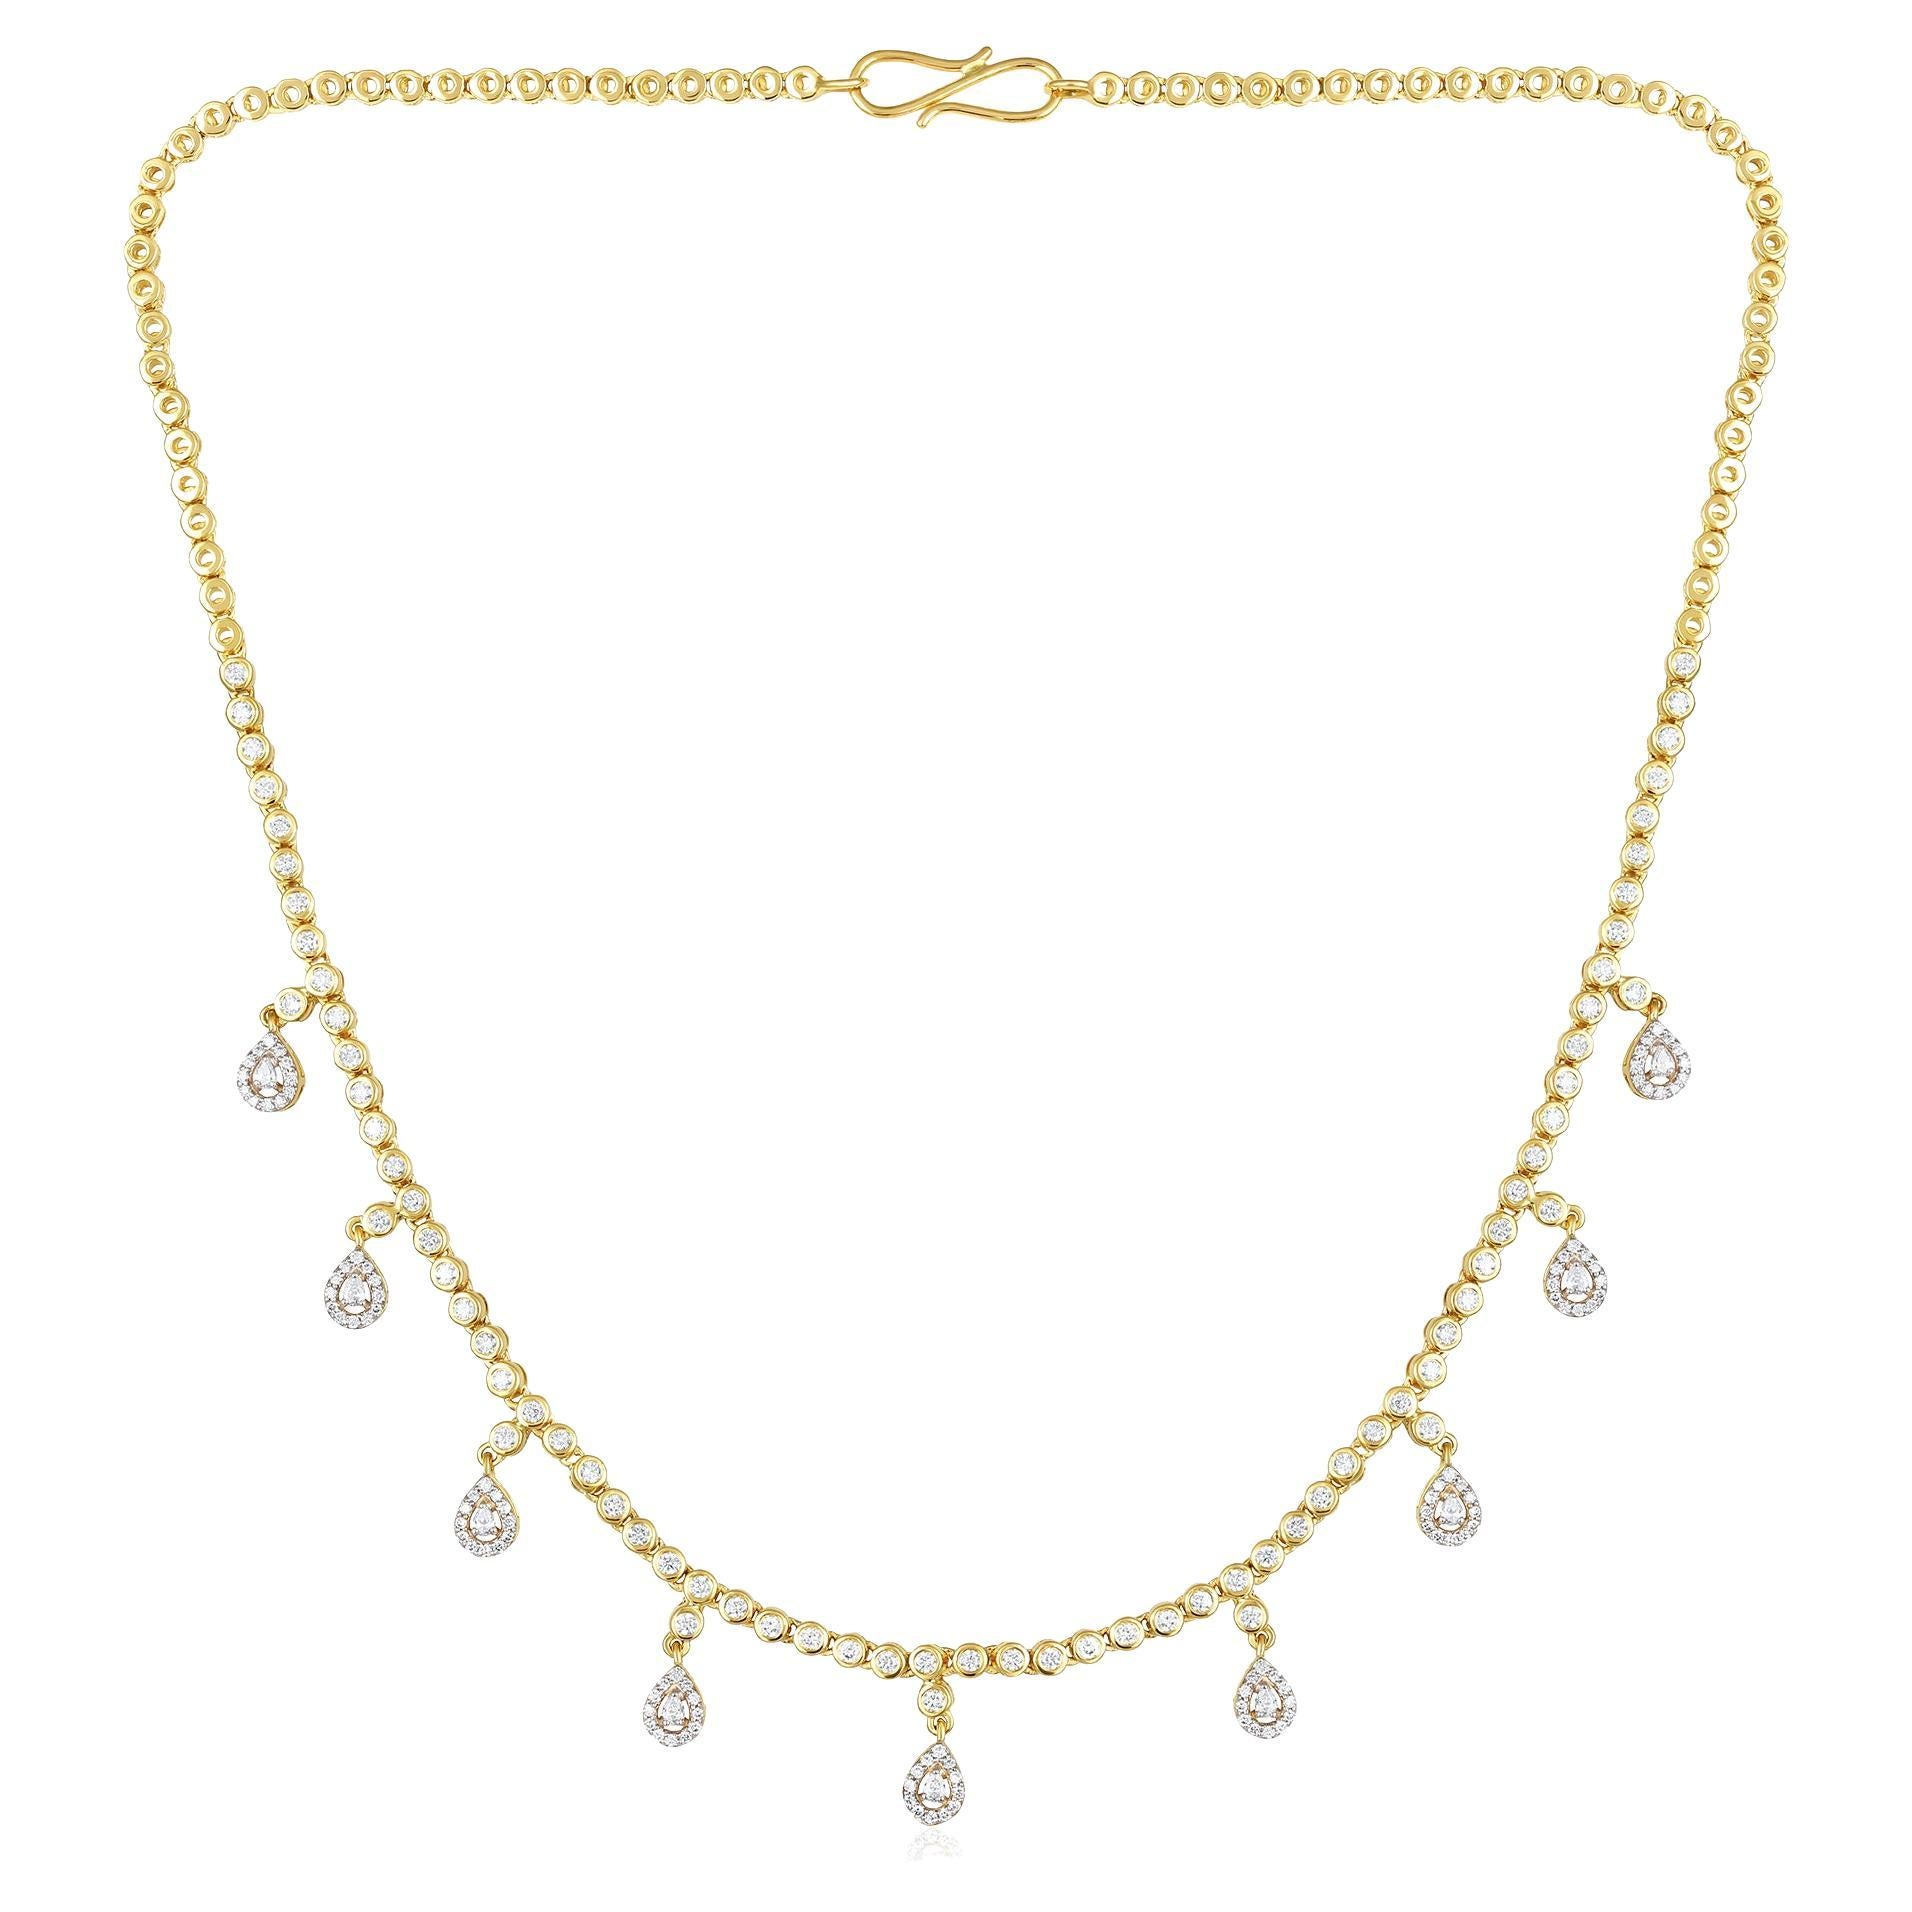 Designer 2.5ct Natural Diamond Pear 10K Gold Queen Wedding Fringe Necklace